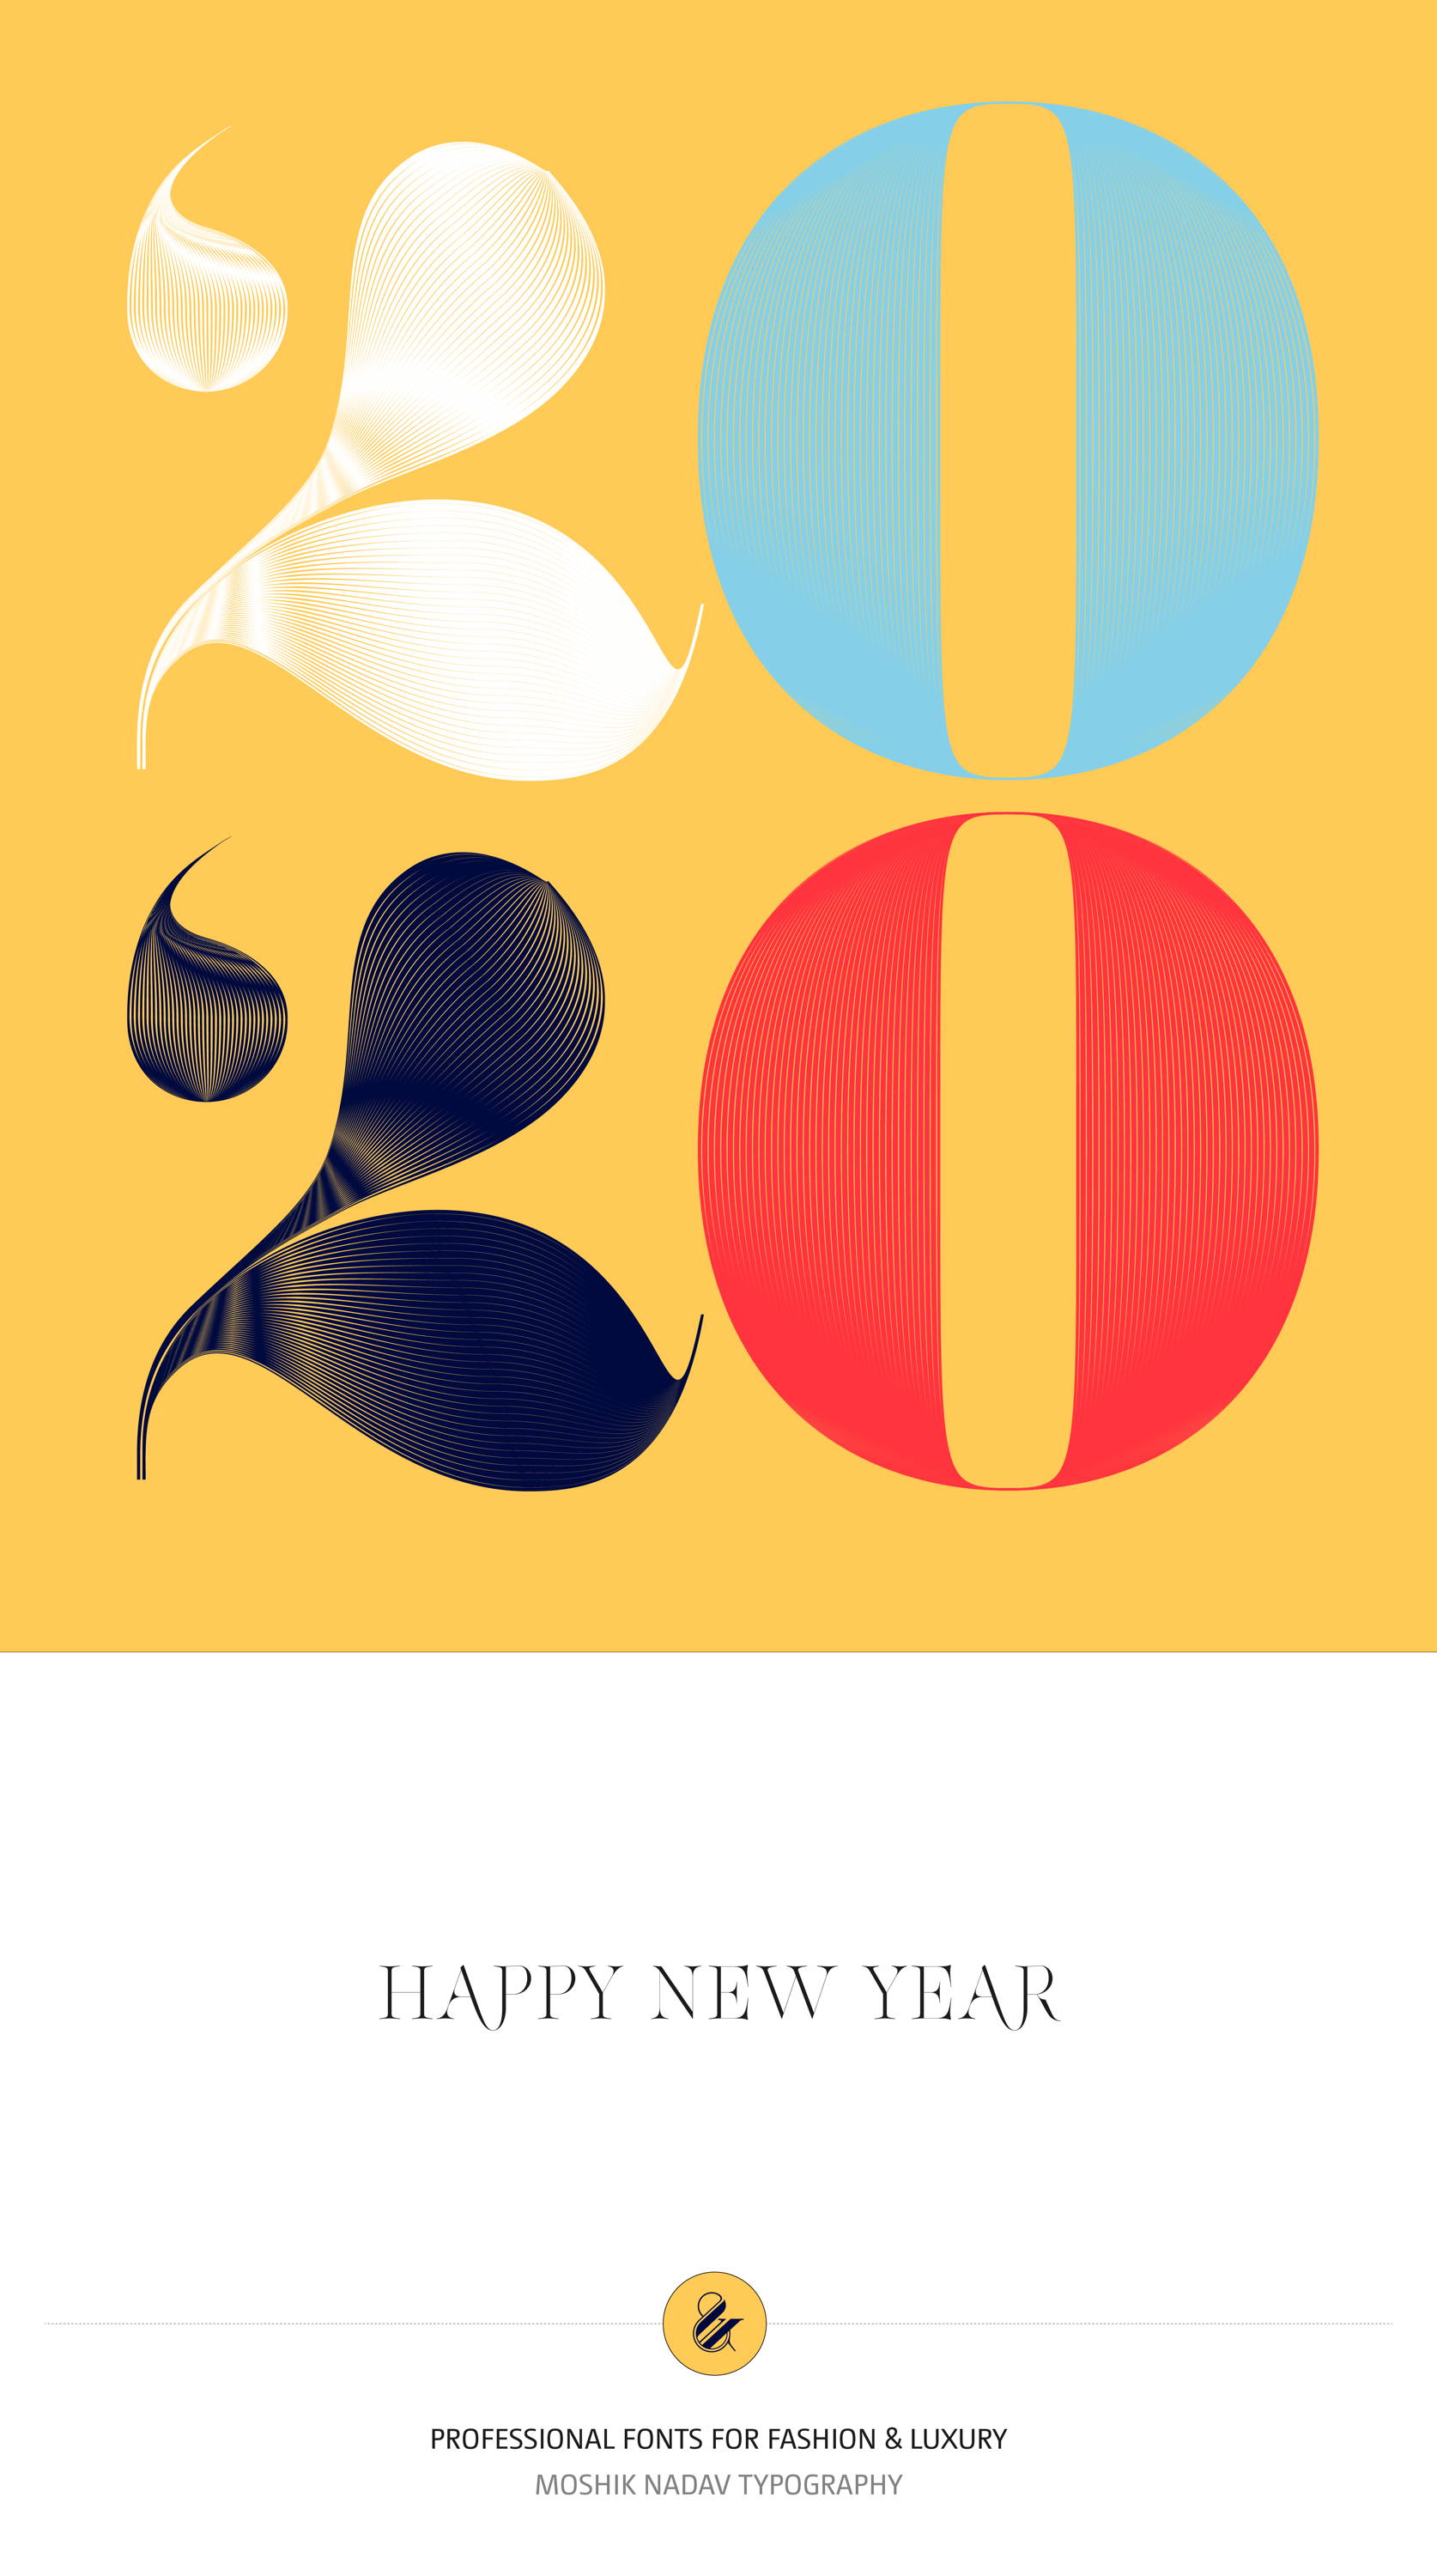 2020, Happy New Year, Typography, Fashion Typography, Fashion fonts, Bold font, Sexy fonts, Moshik Nadav, Typography poster